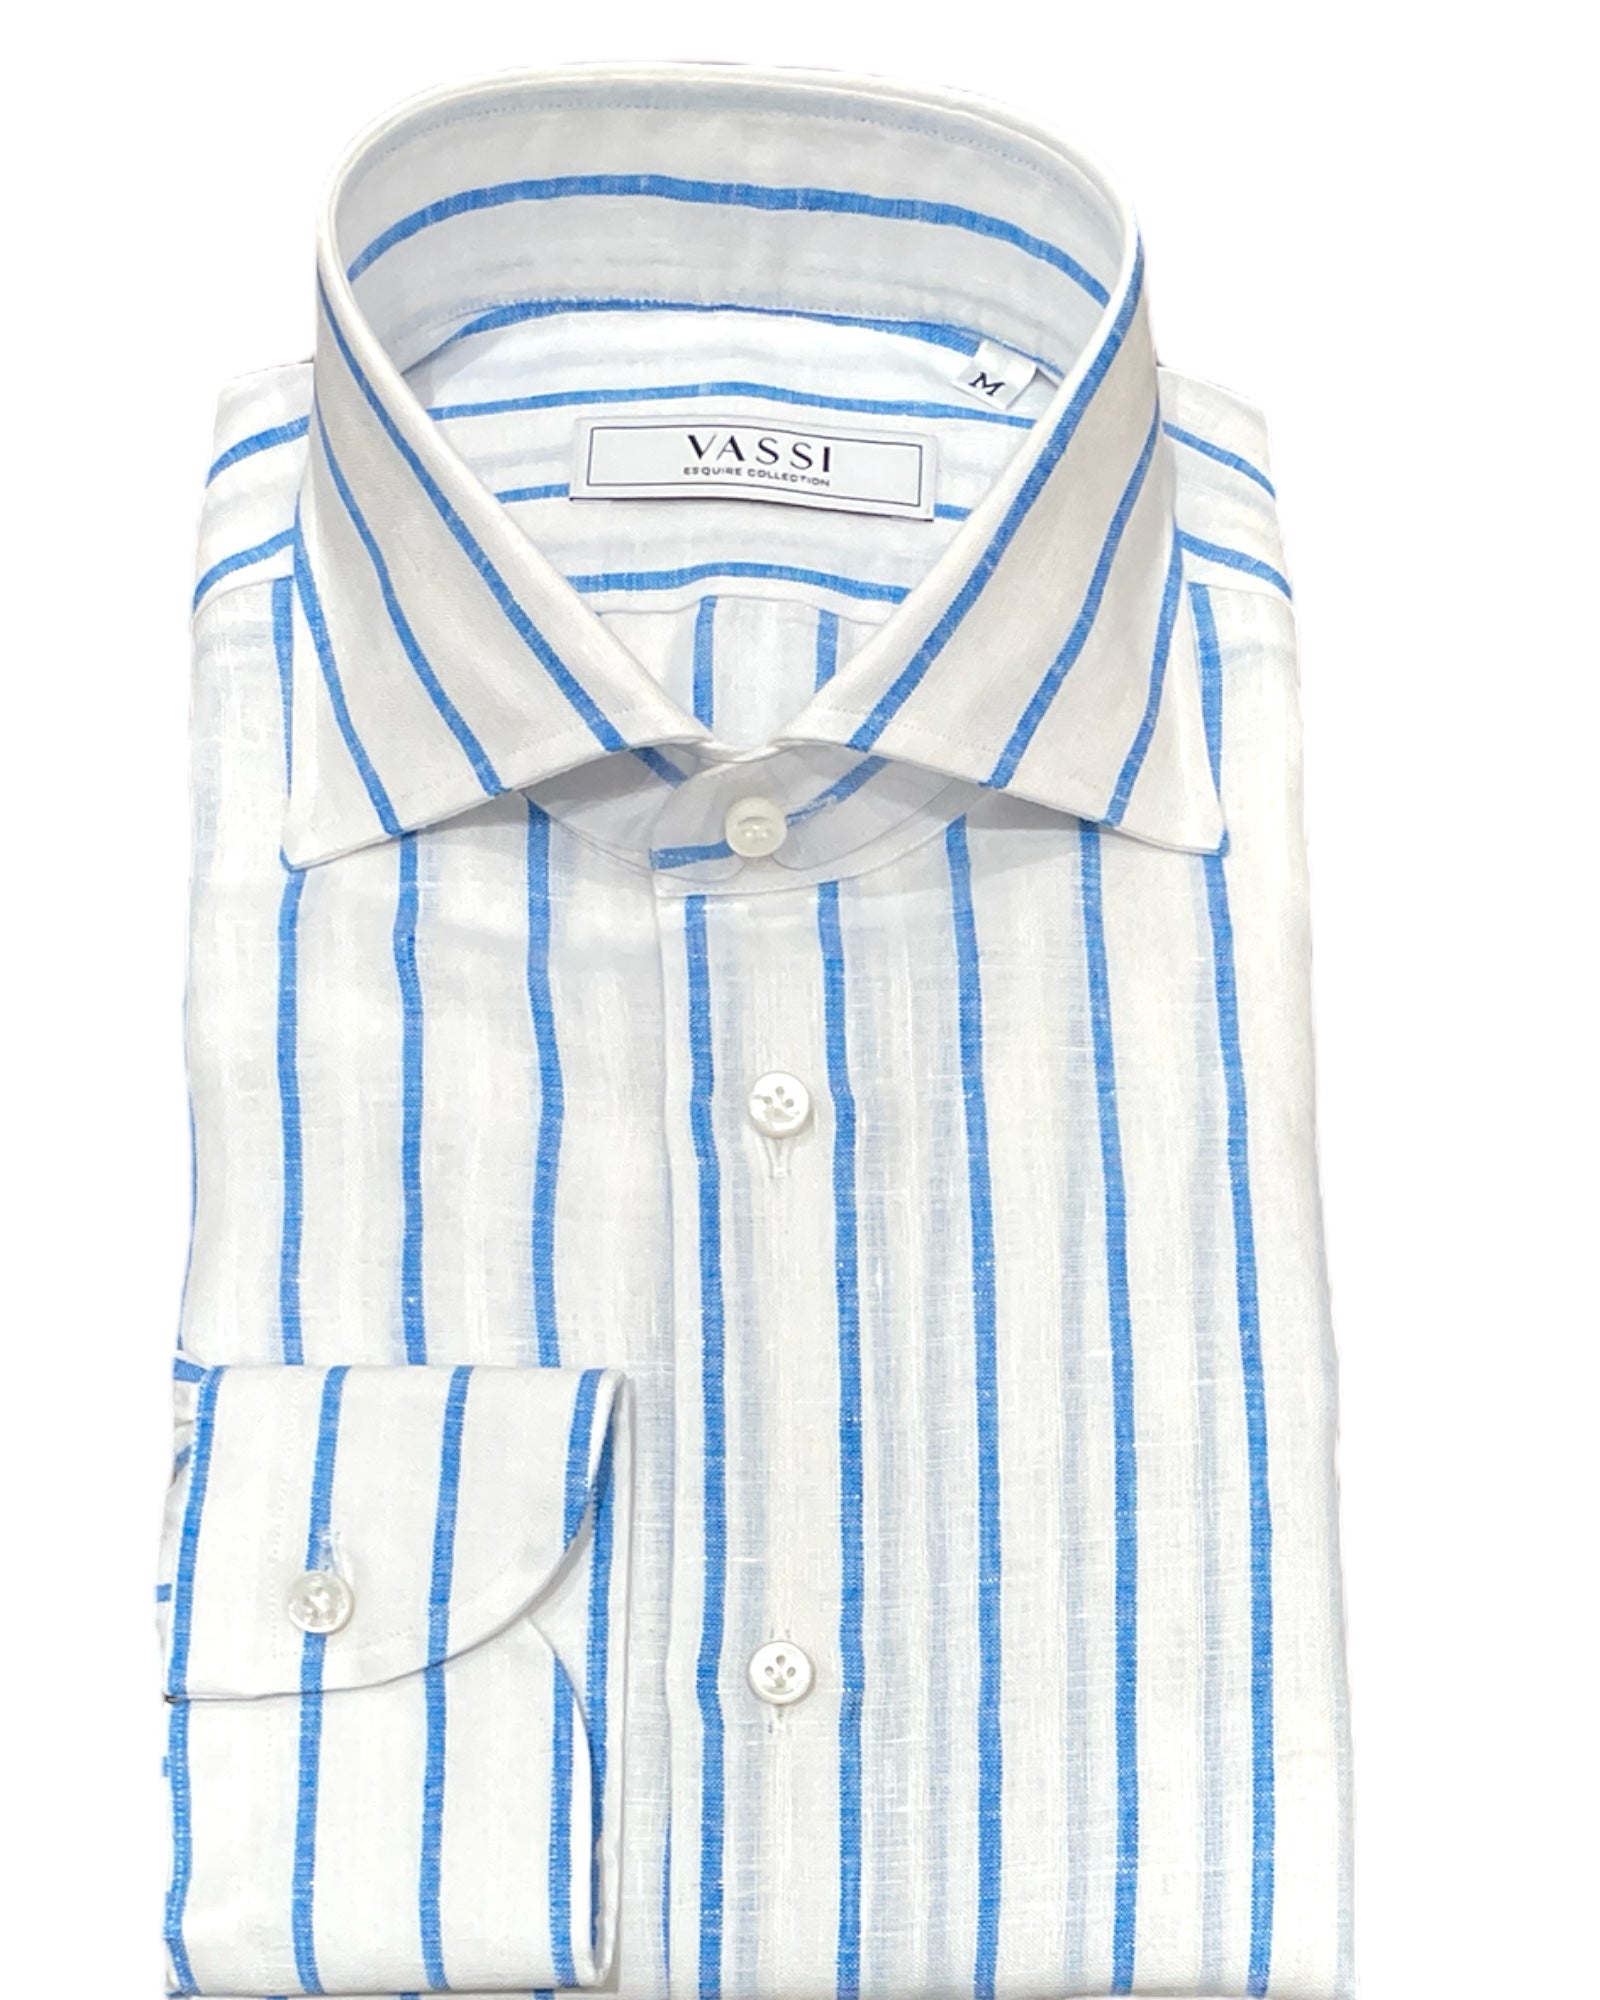 Copy of White Linen Sport Shirt with Bold Blue Stripes SPORT SHIRTSM